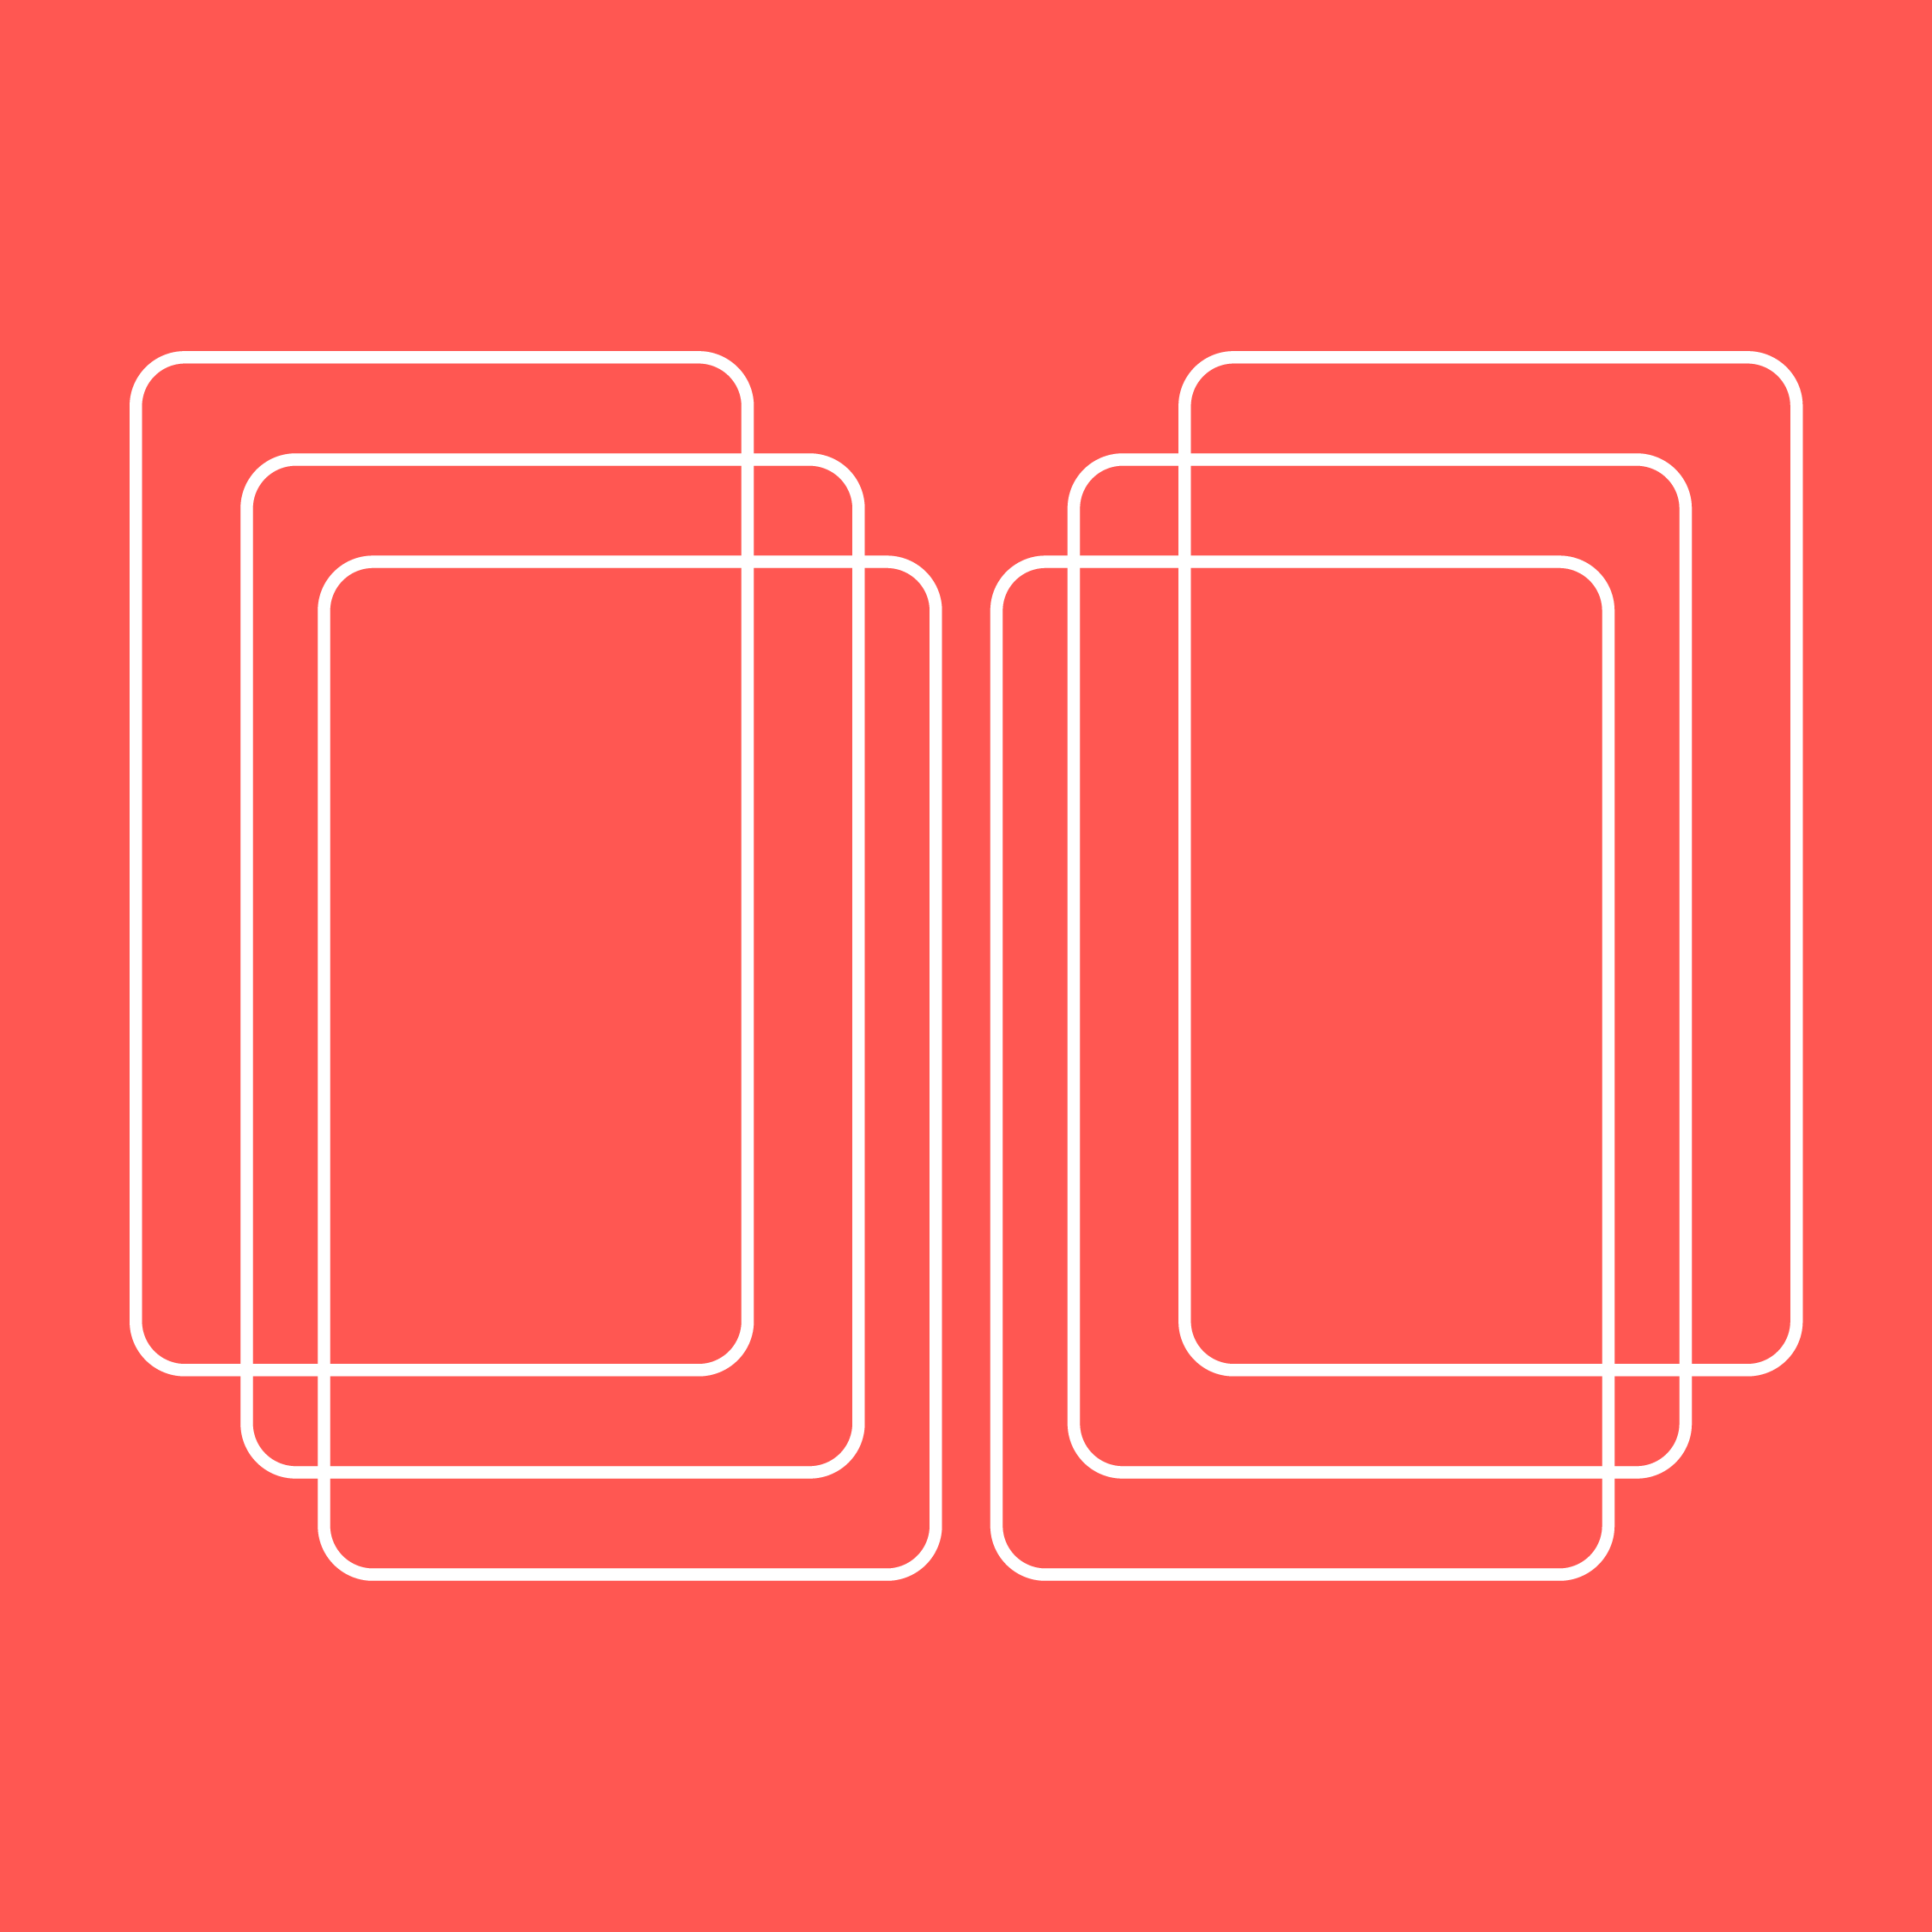 three overlapping white bordered rectangles, horizontally mirrored